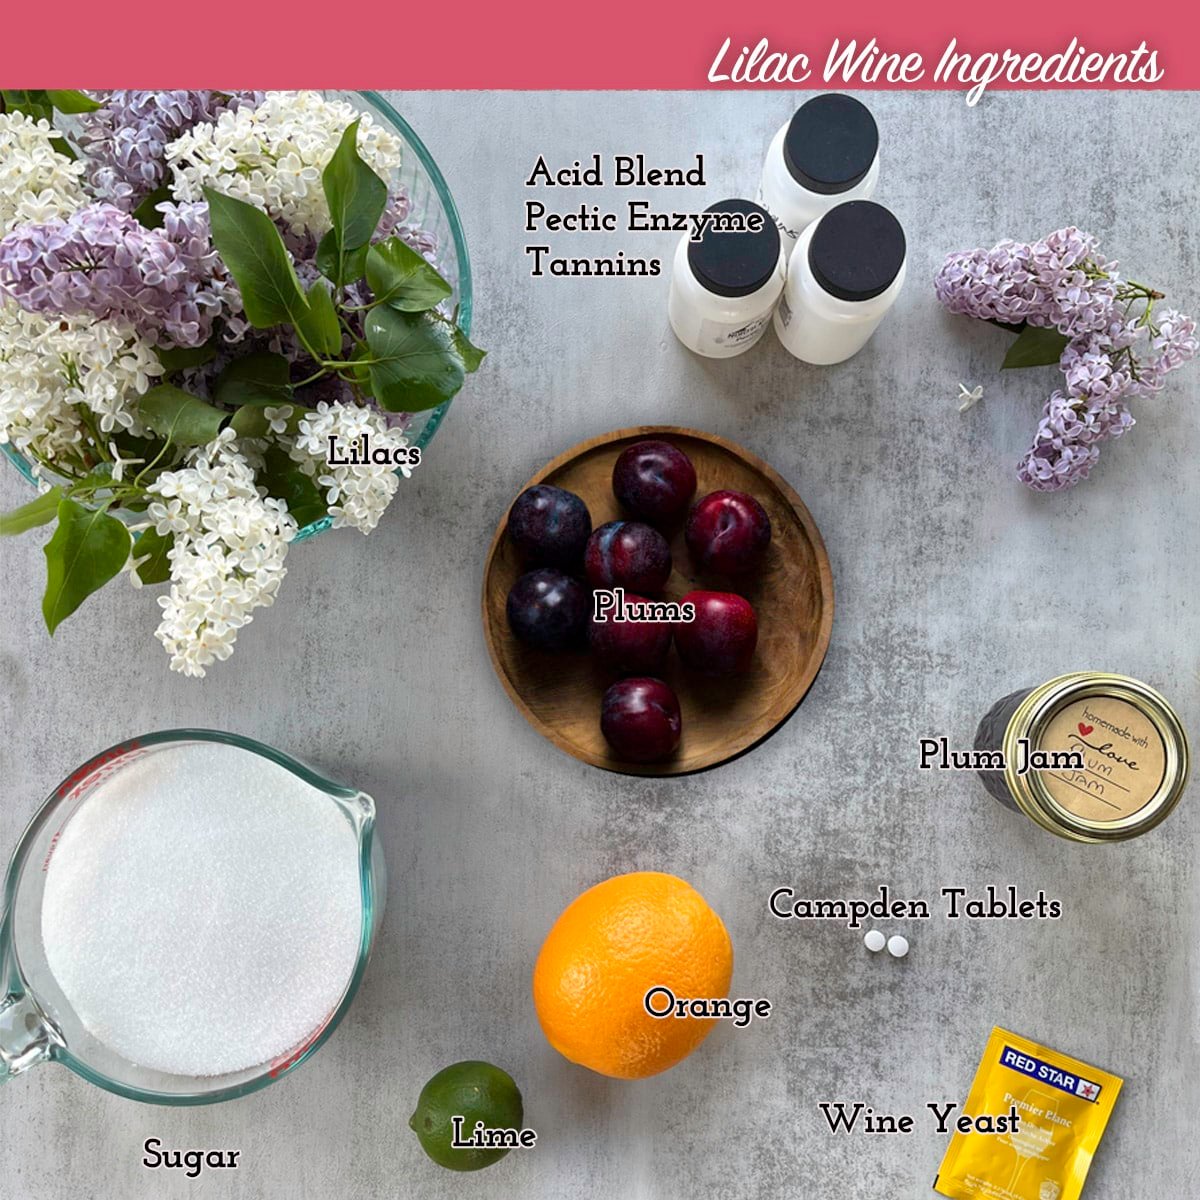 Lilac wine ingredients